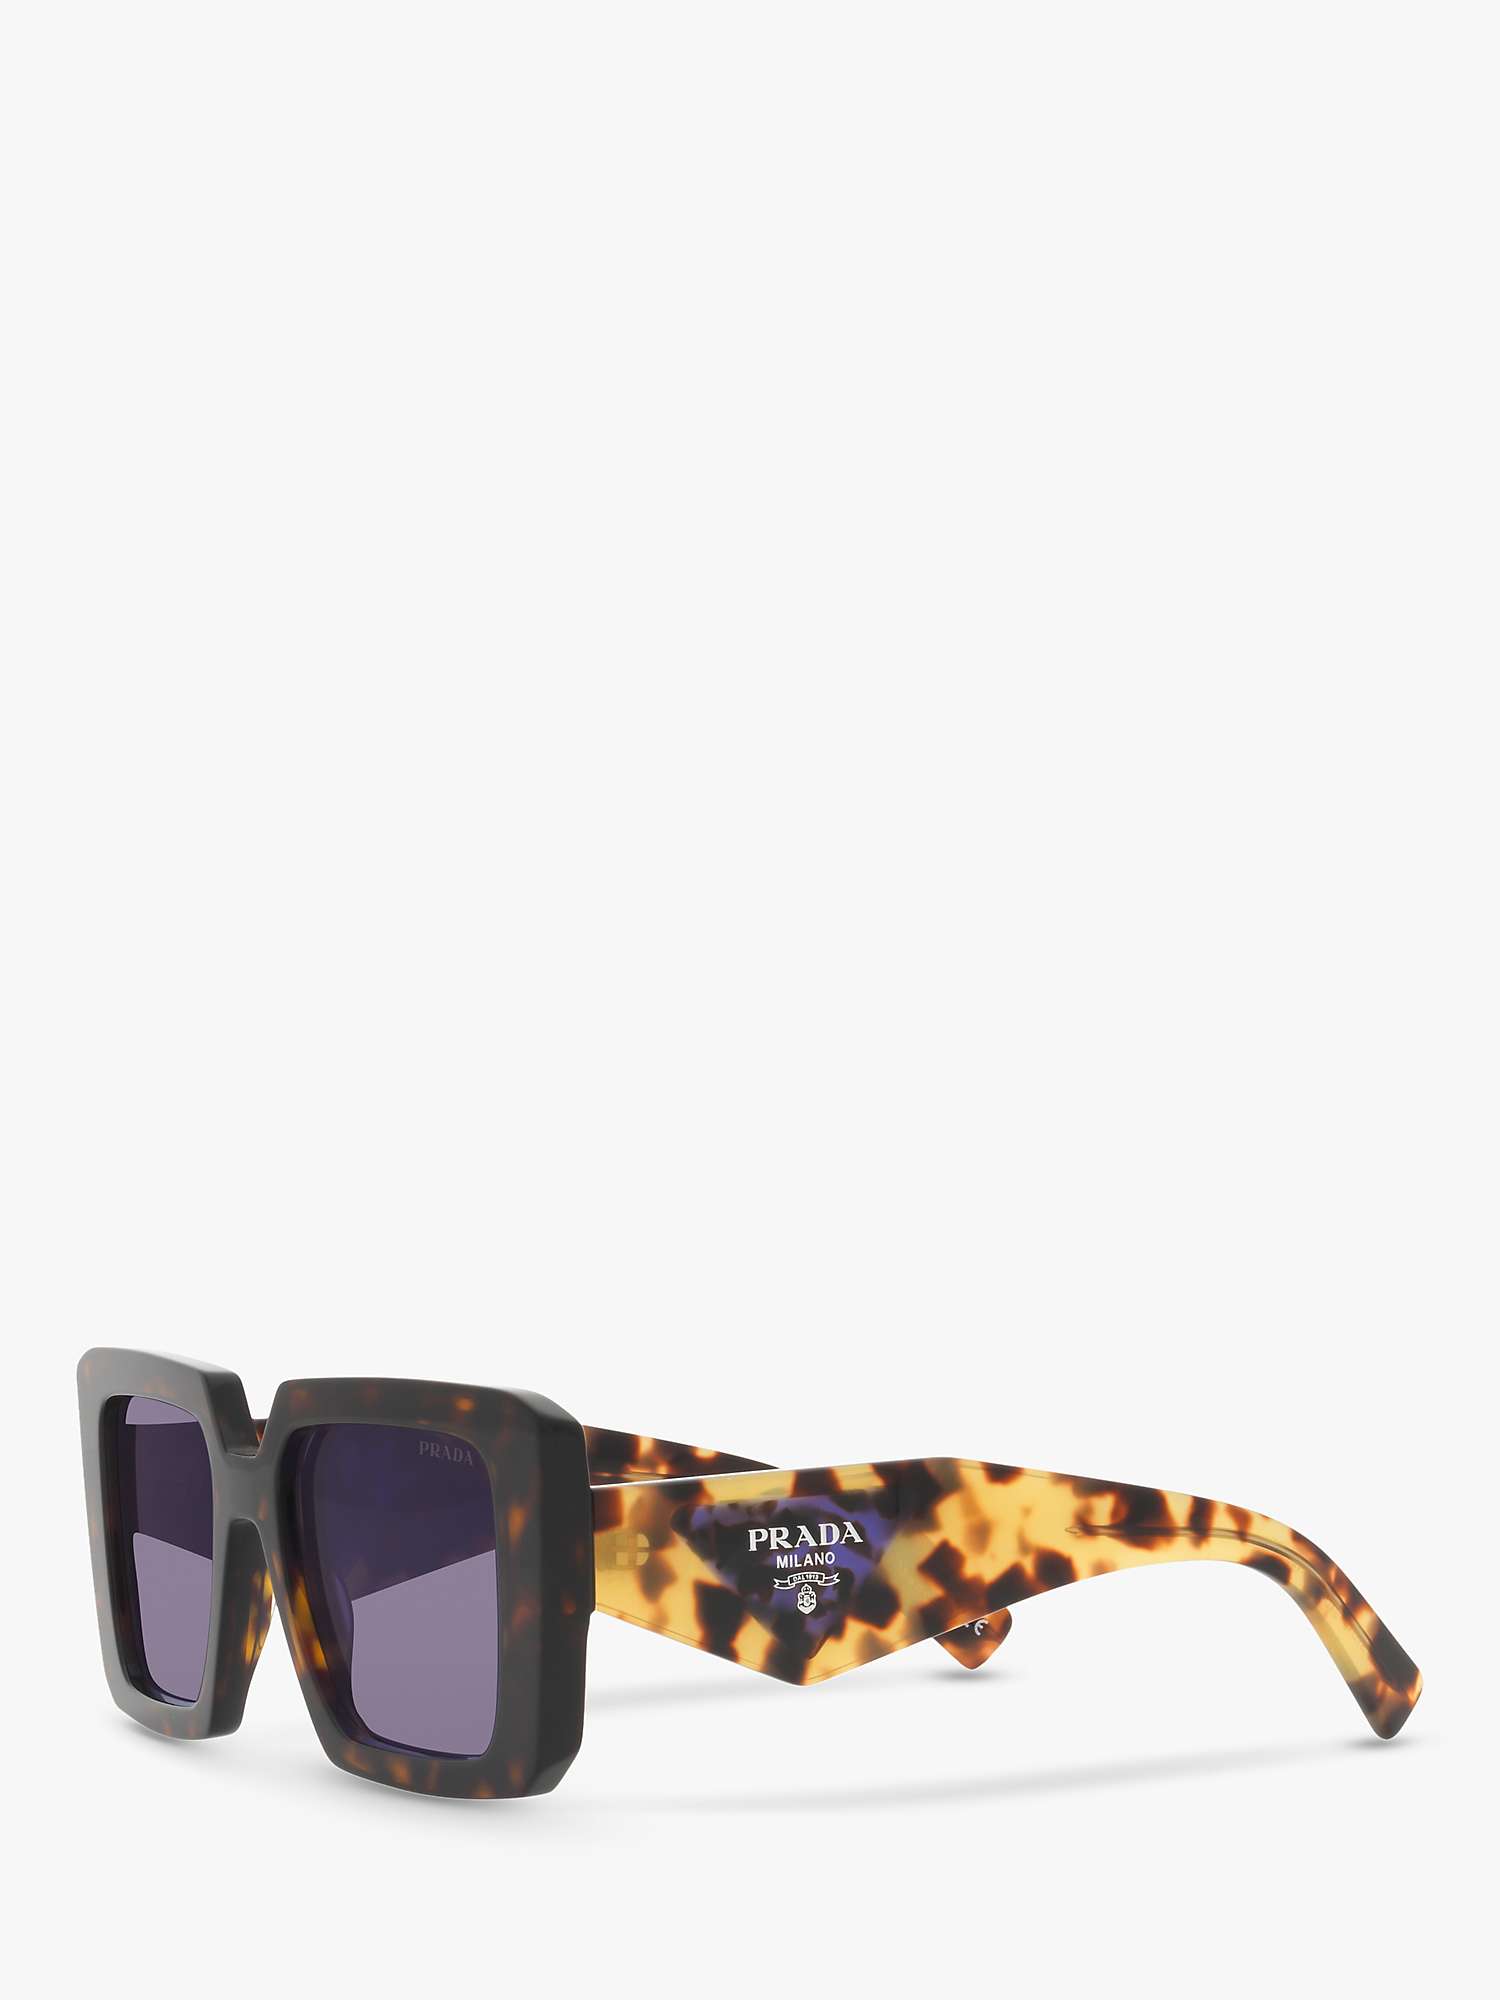 Buy Prada PR 23YS Women's Chunky Square Sunglasses, Tortoise/Violet Online at johnlewis.com